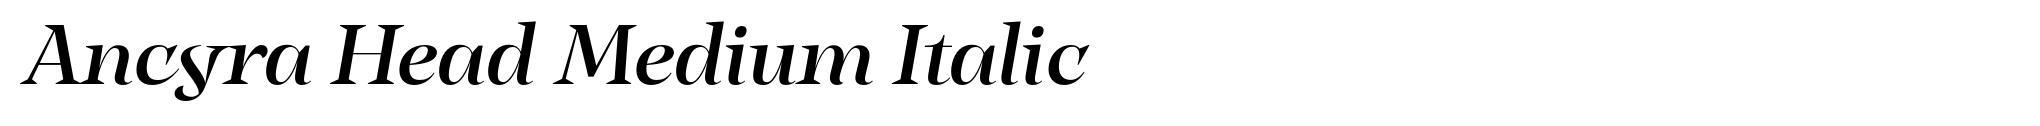 Ancyra Head Medium Italic image